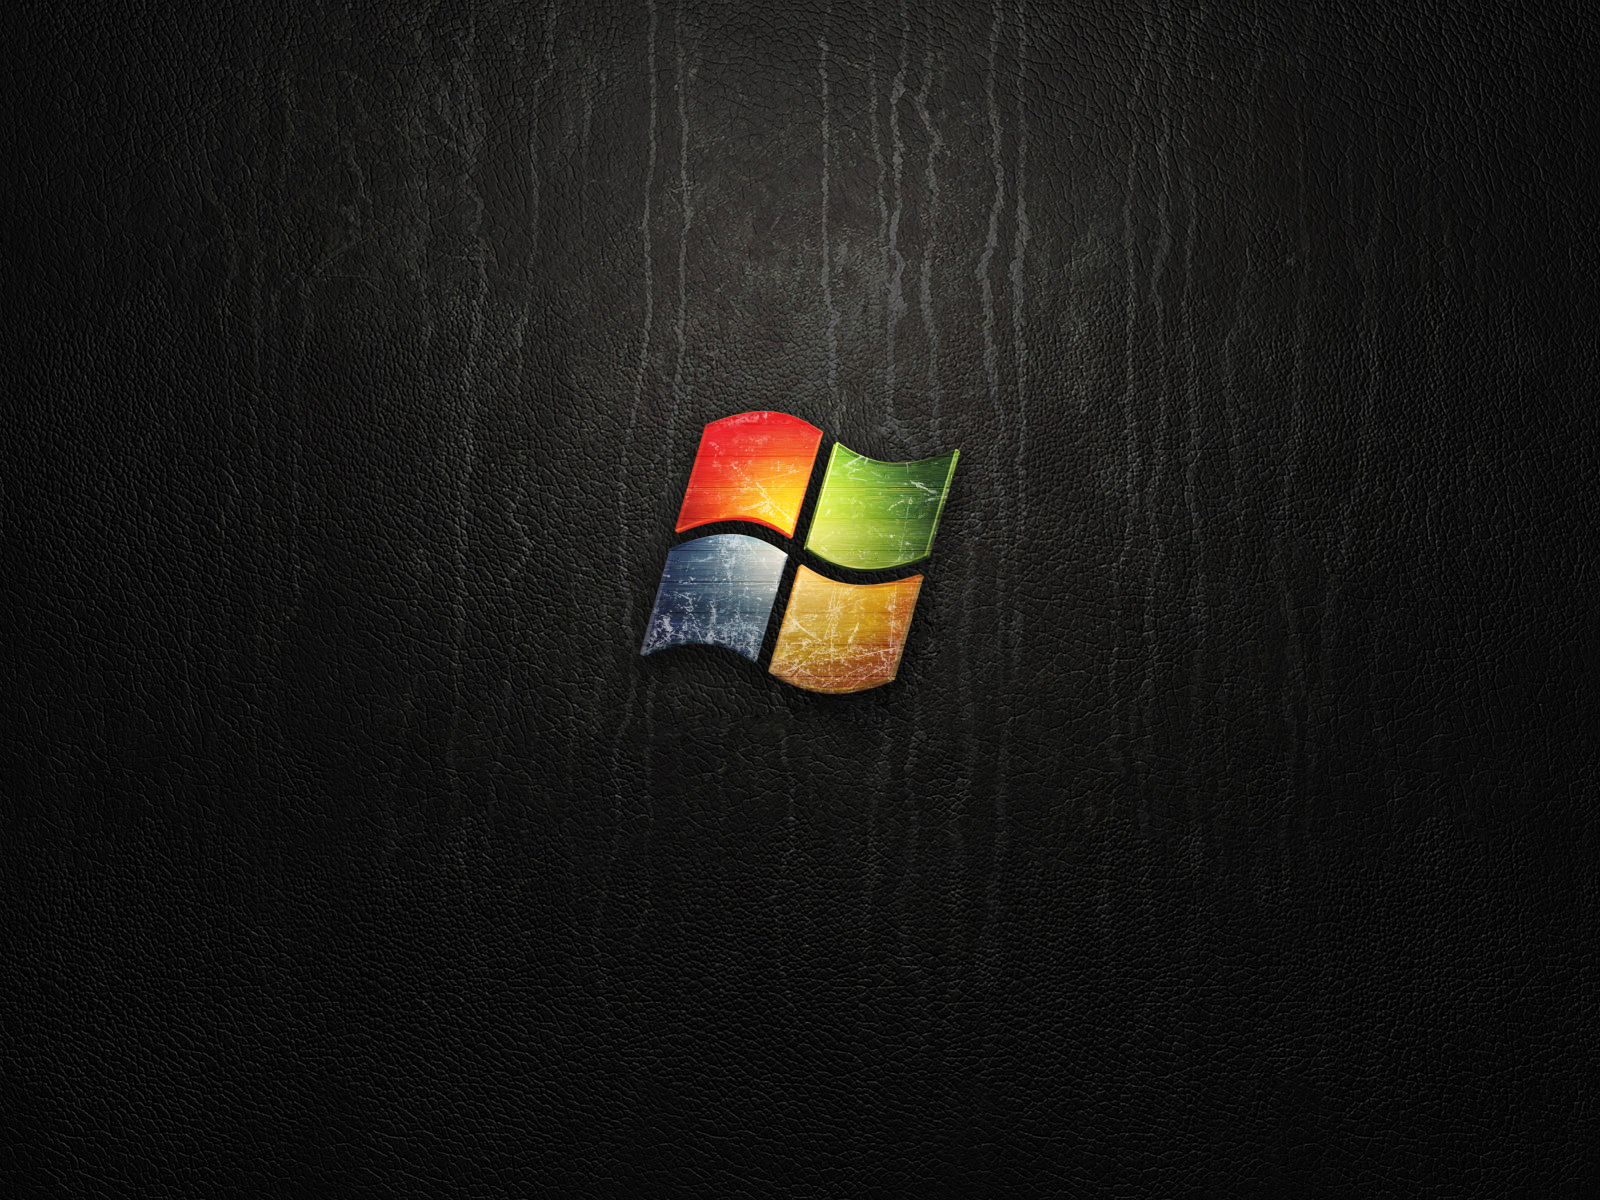 Weathered Windows Wallpaper Desktop Pc And Mac